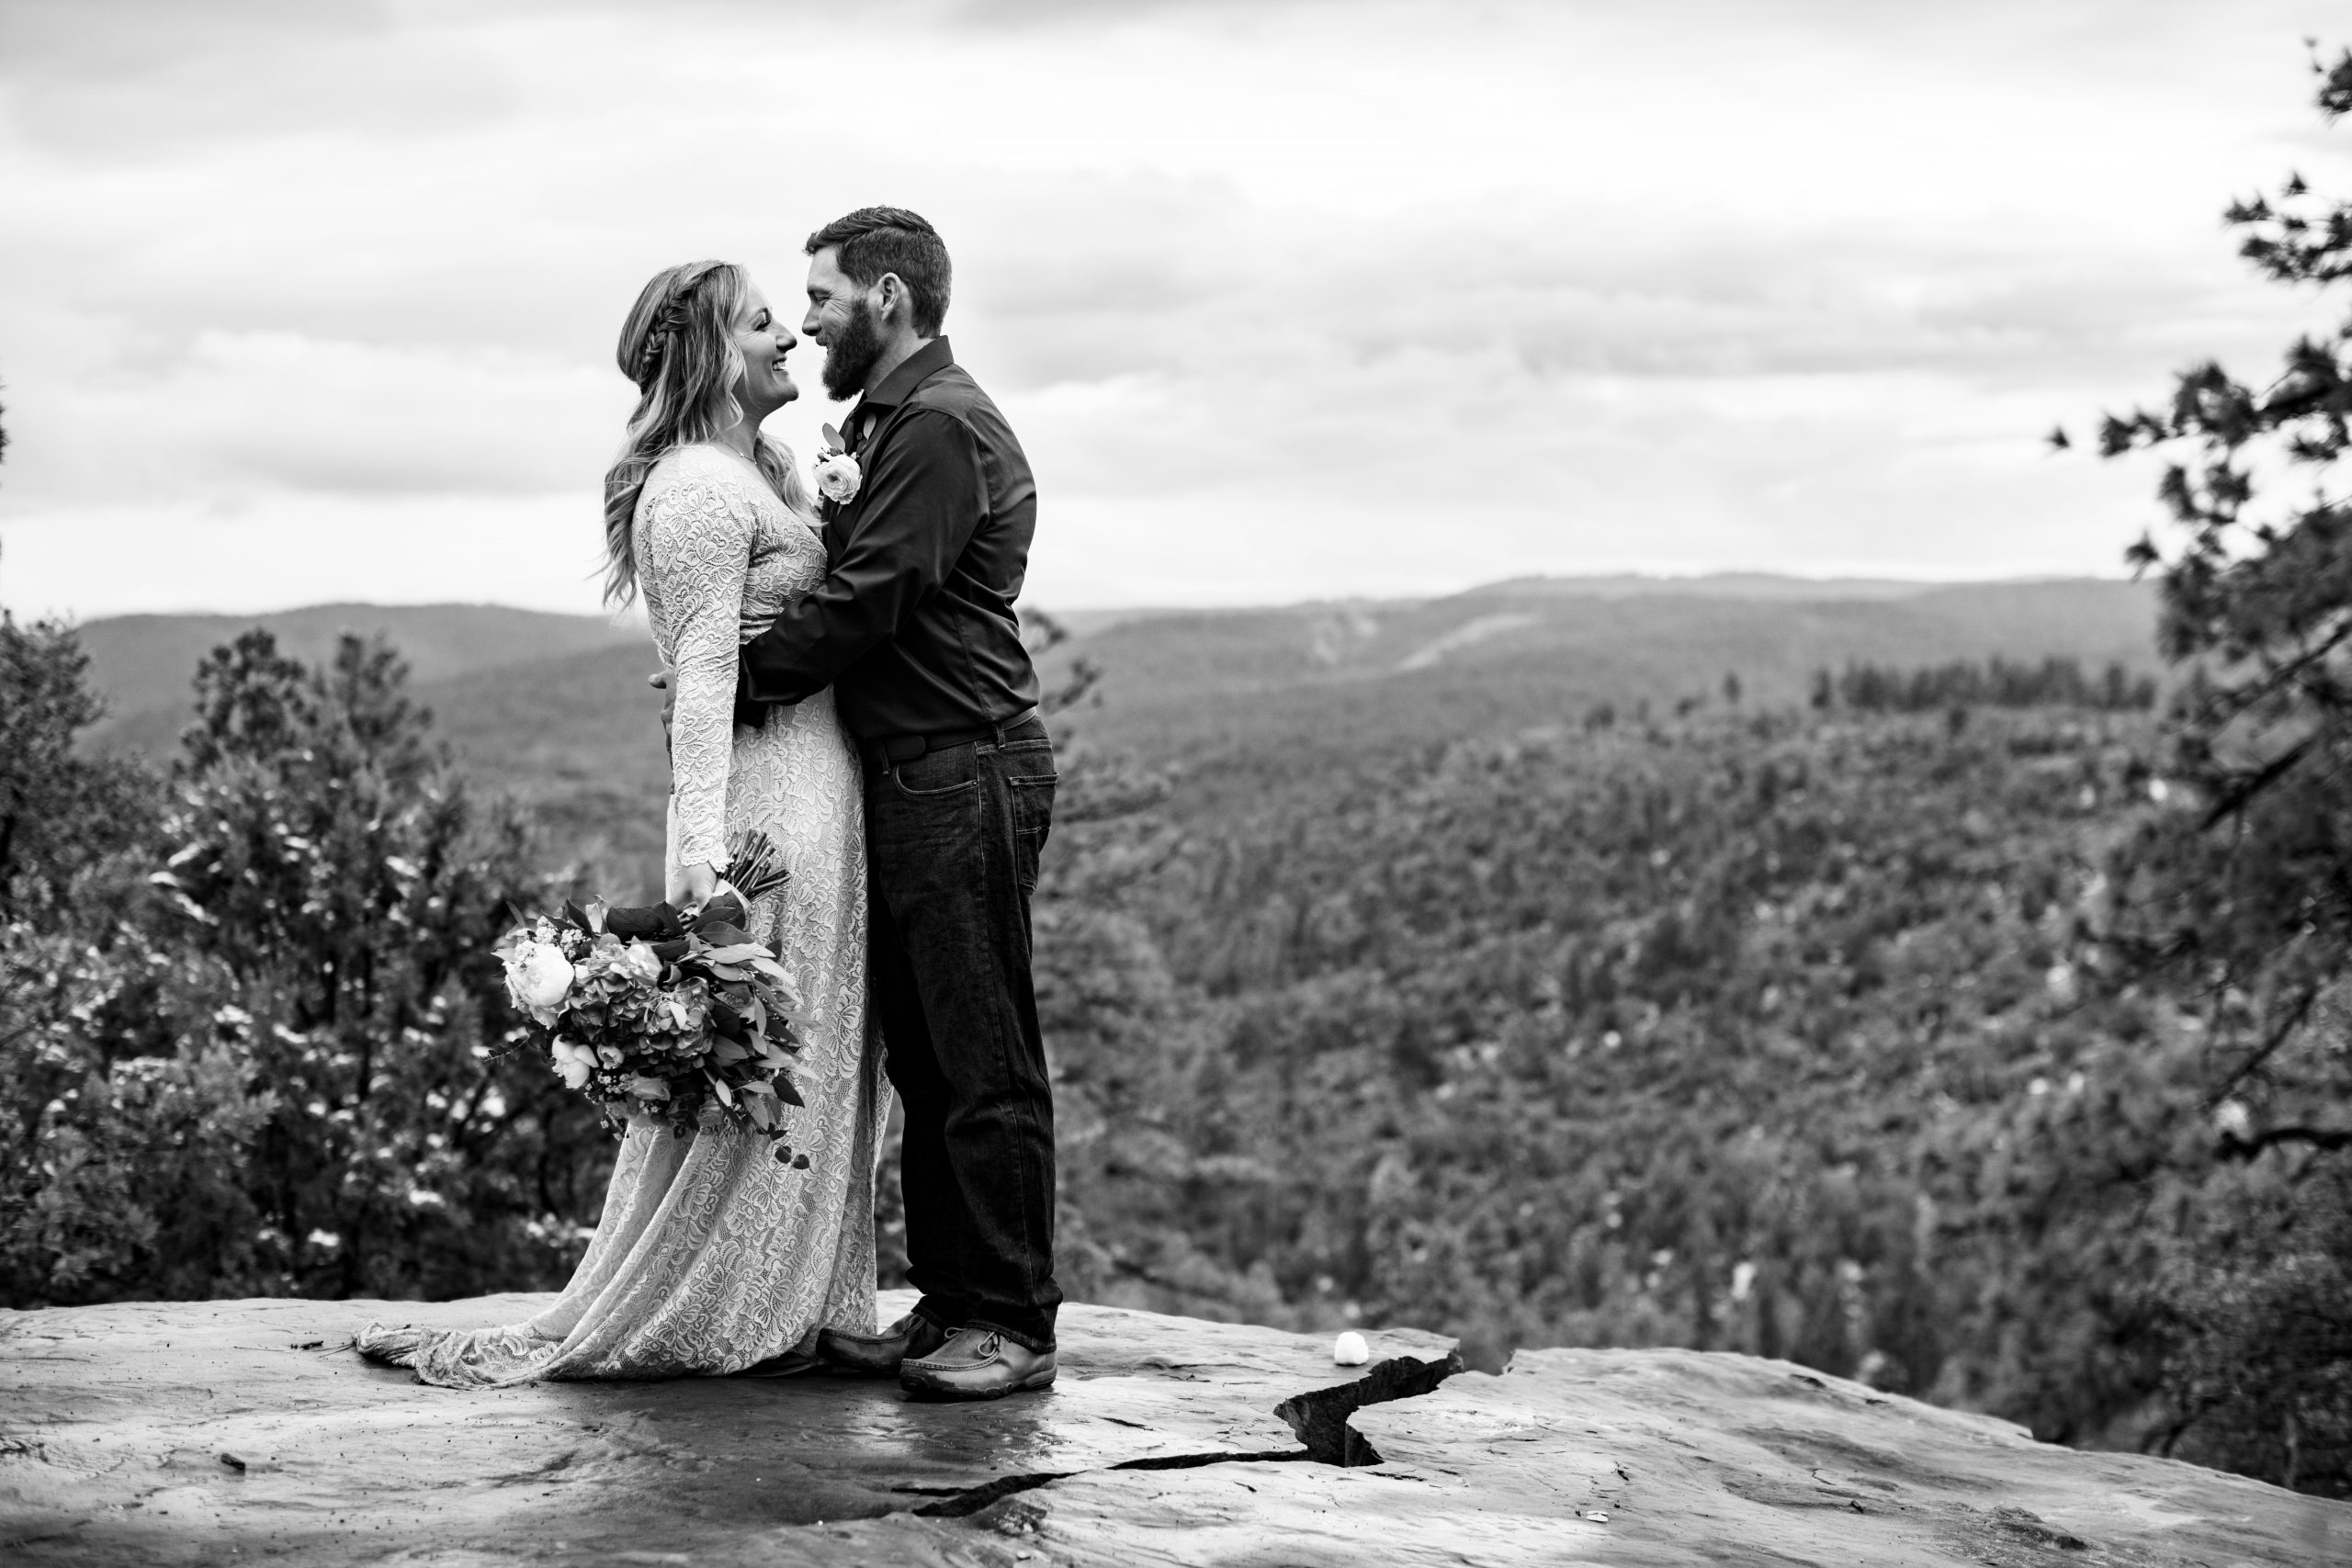 Mogollon Rim elopement photographed by Rebekah Sampson Photography